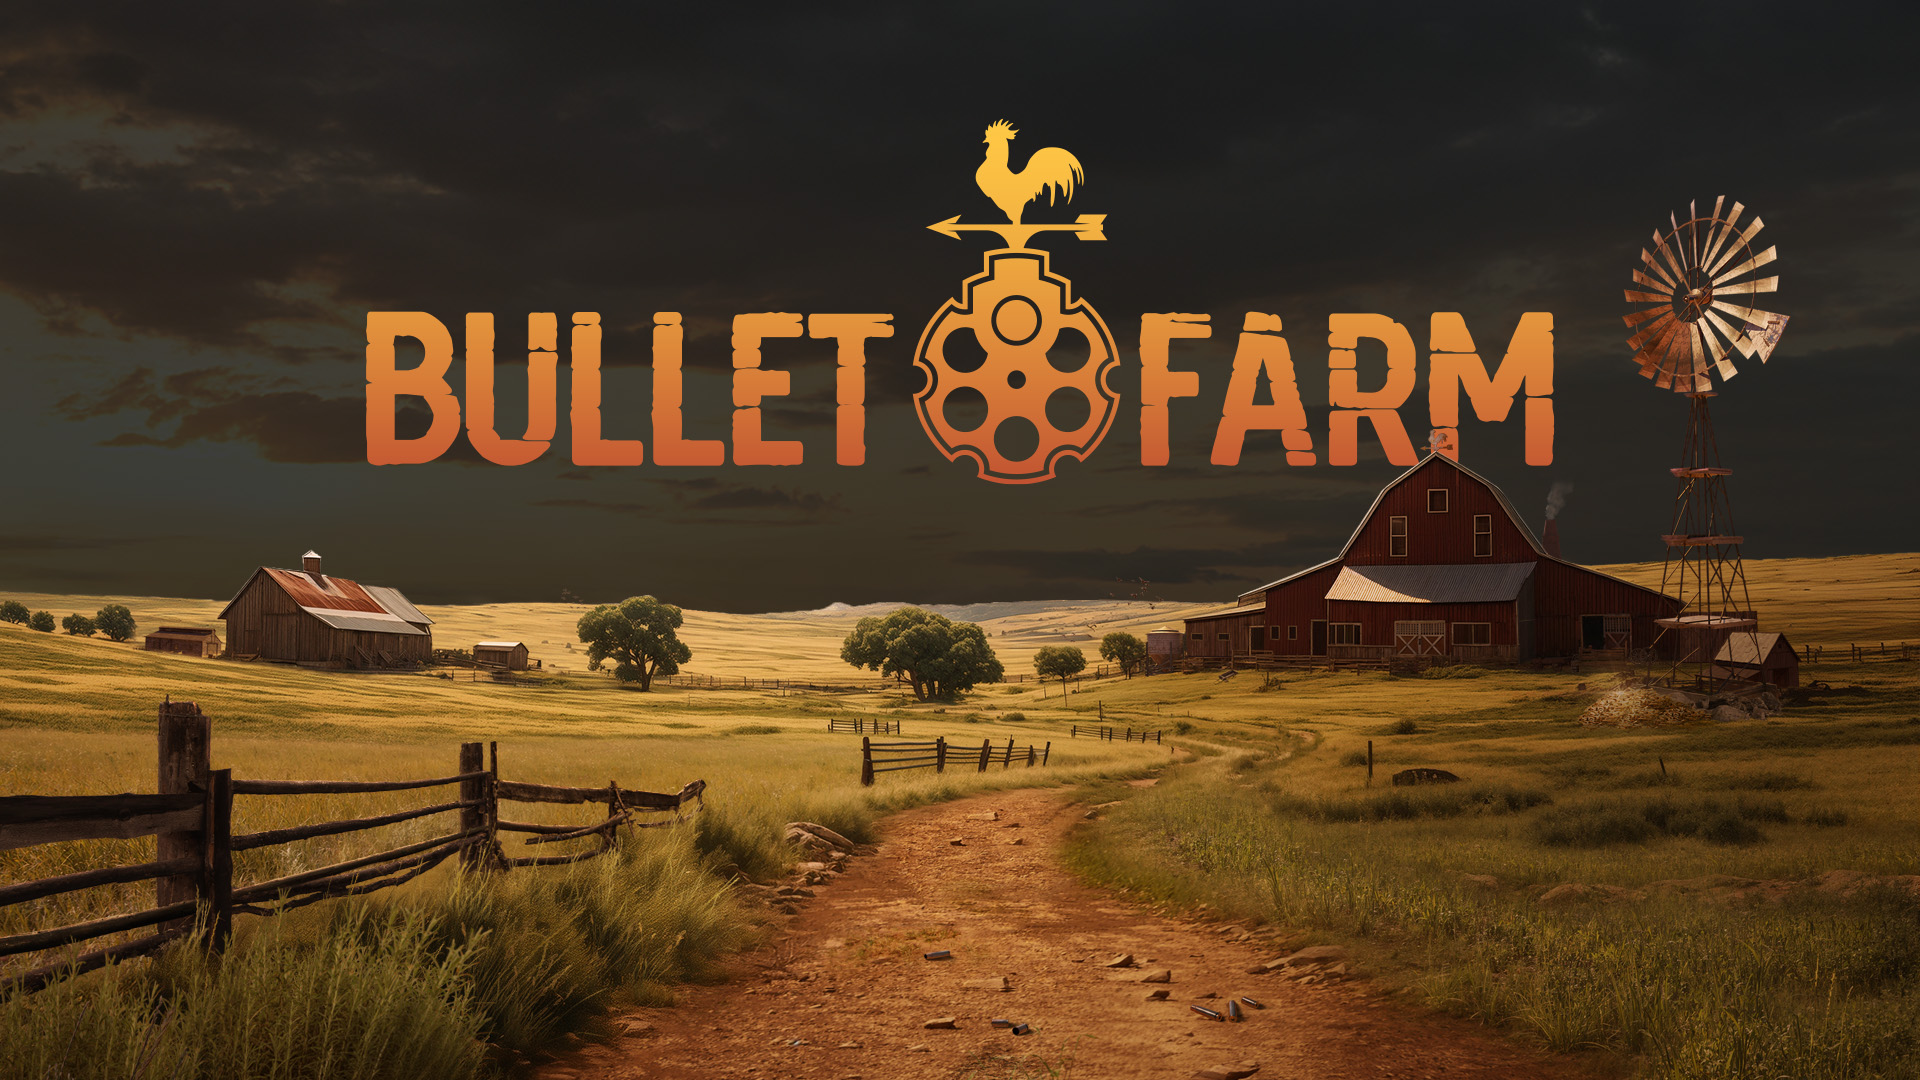 BulletFarm promo image - a farm